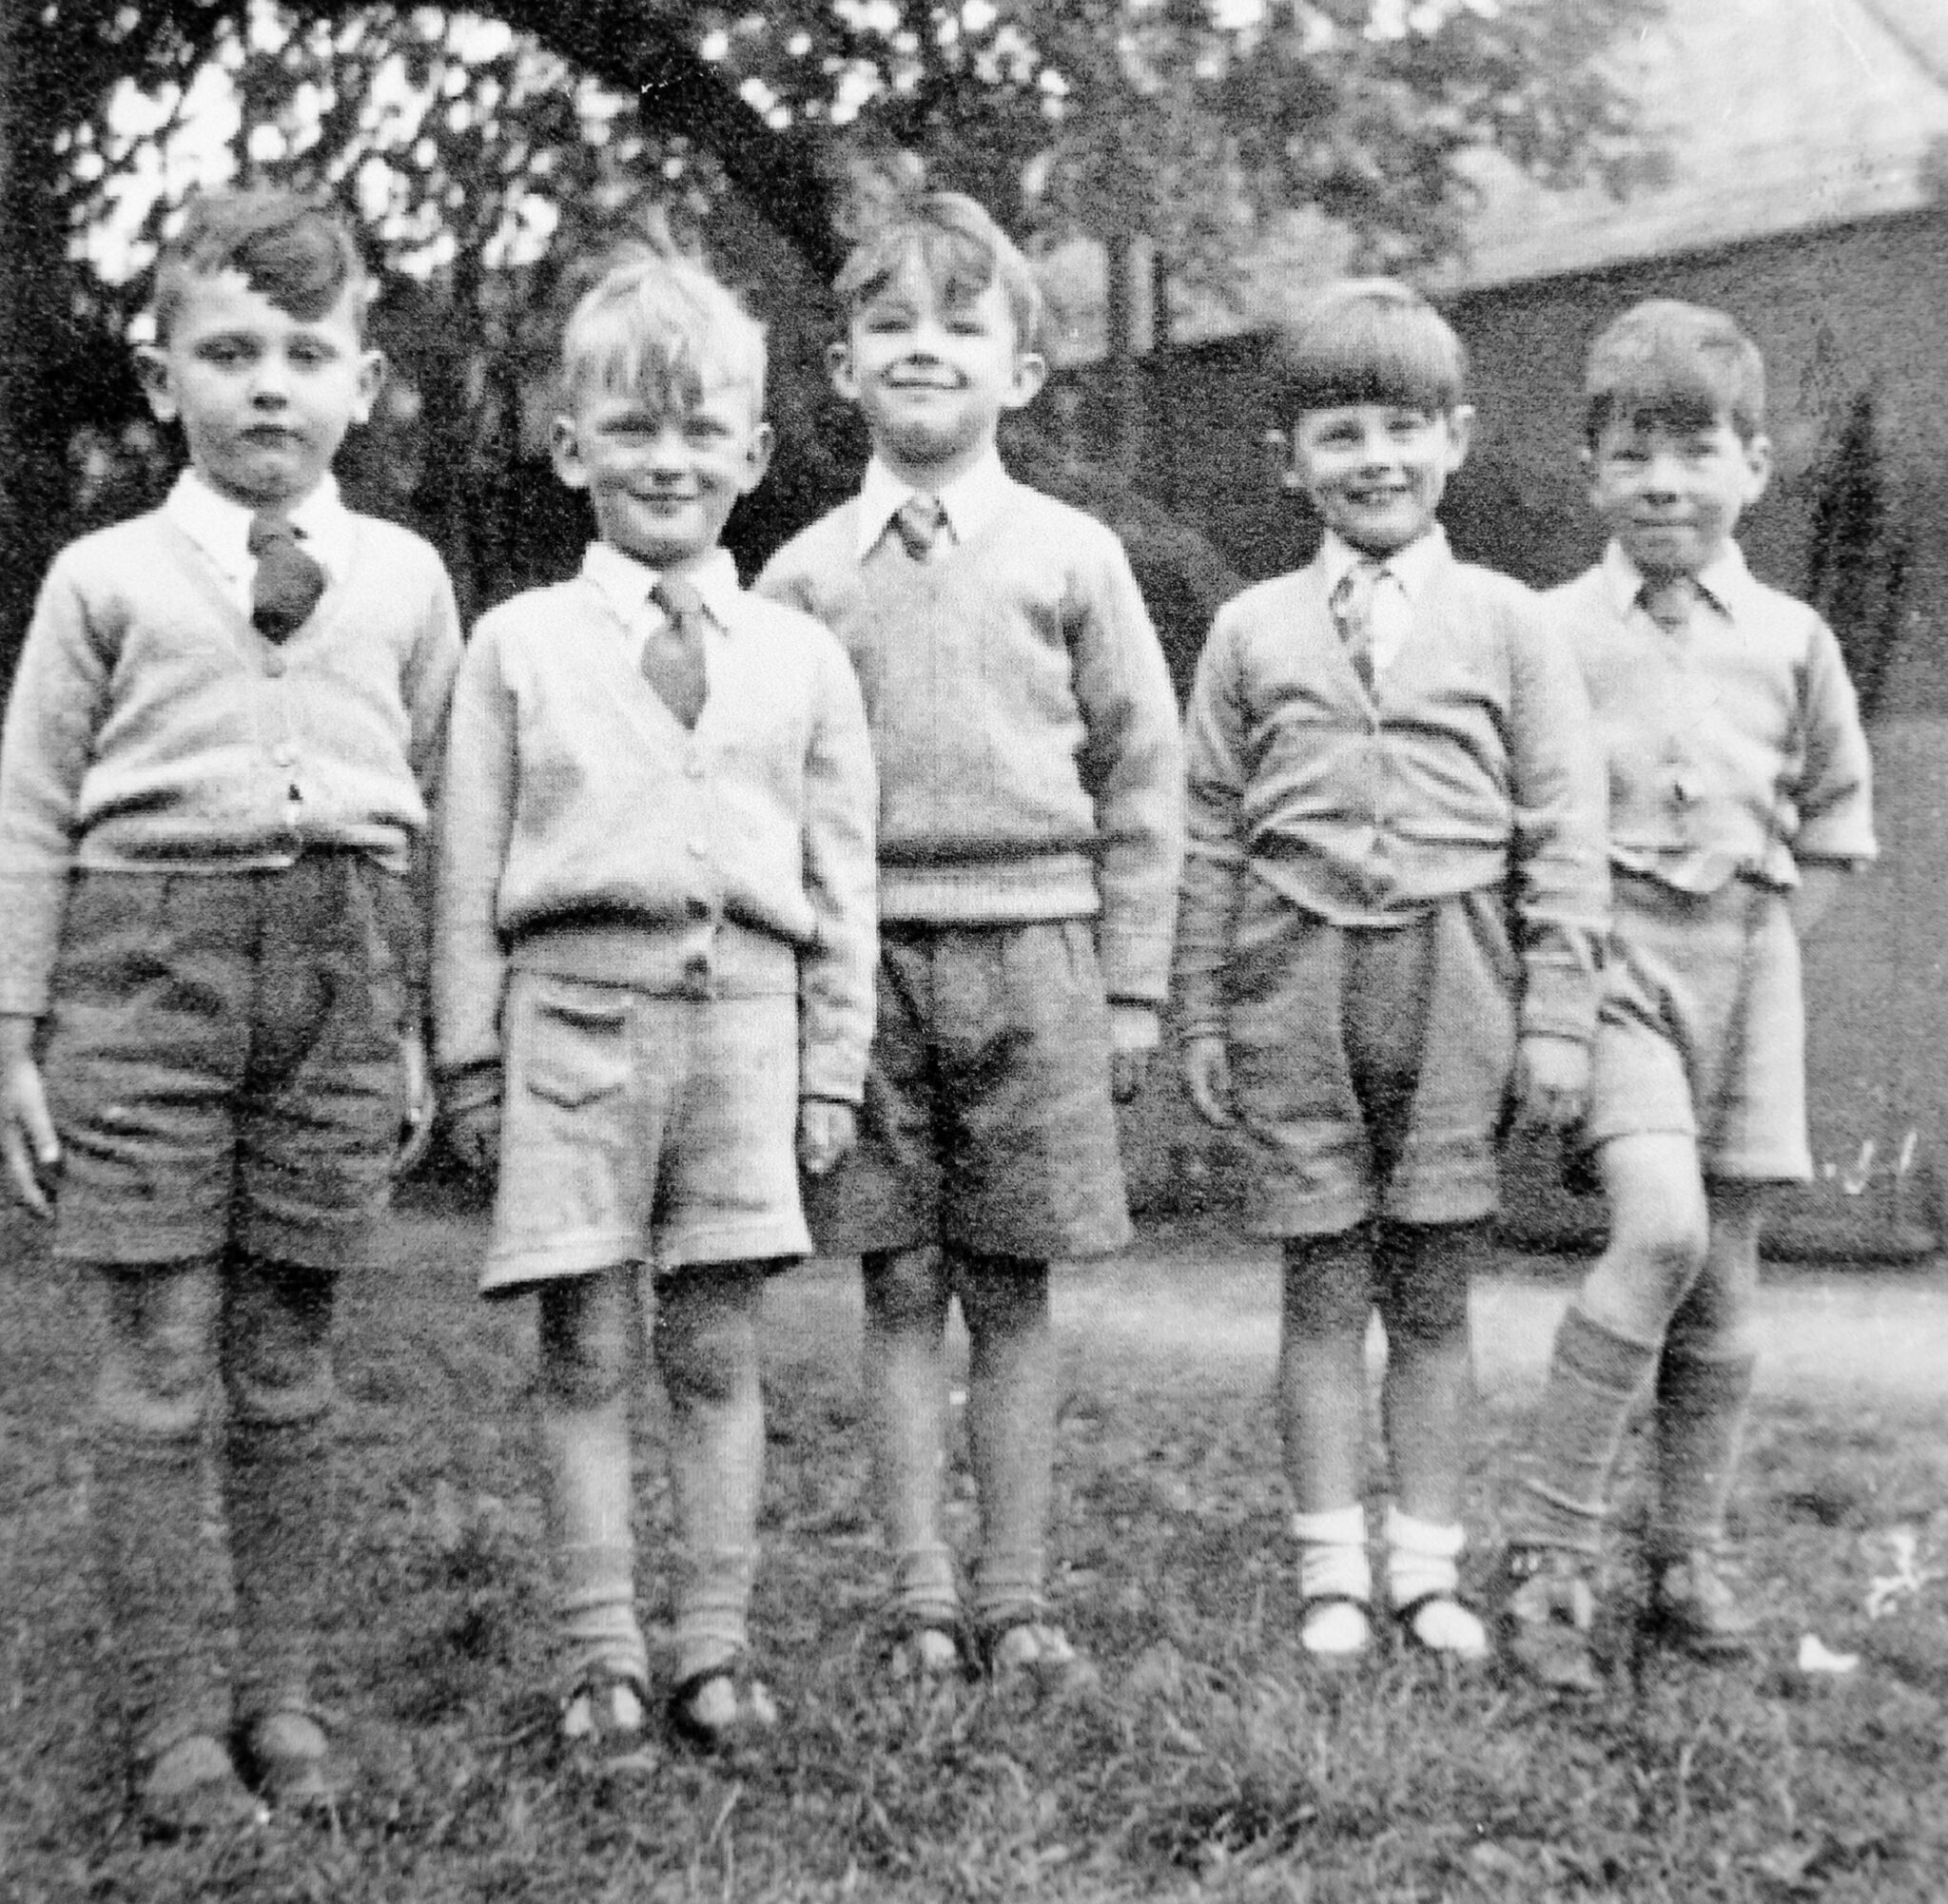 Young children in their uniform